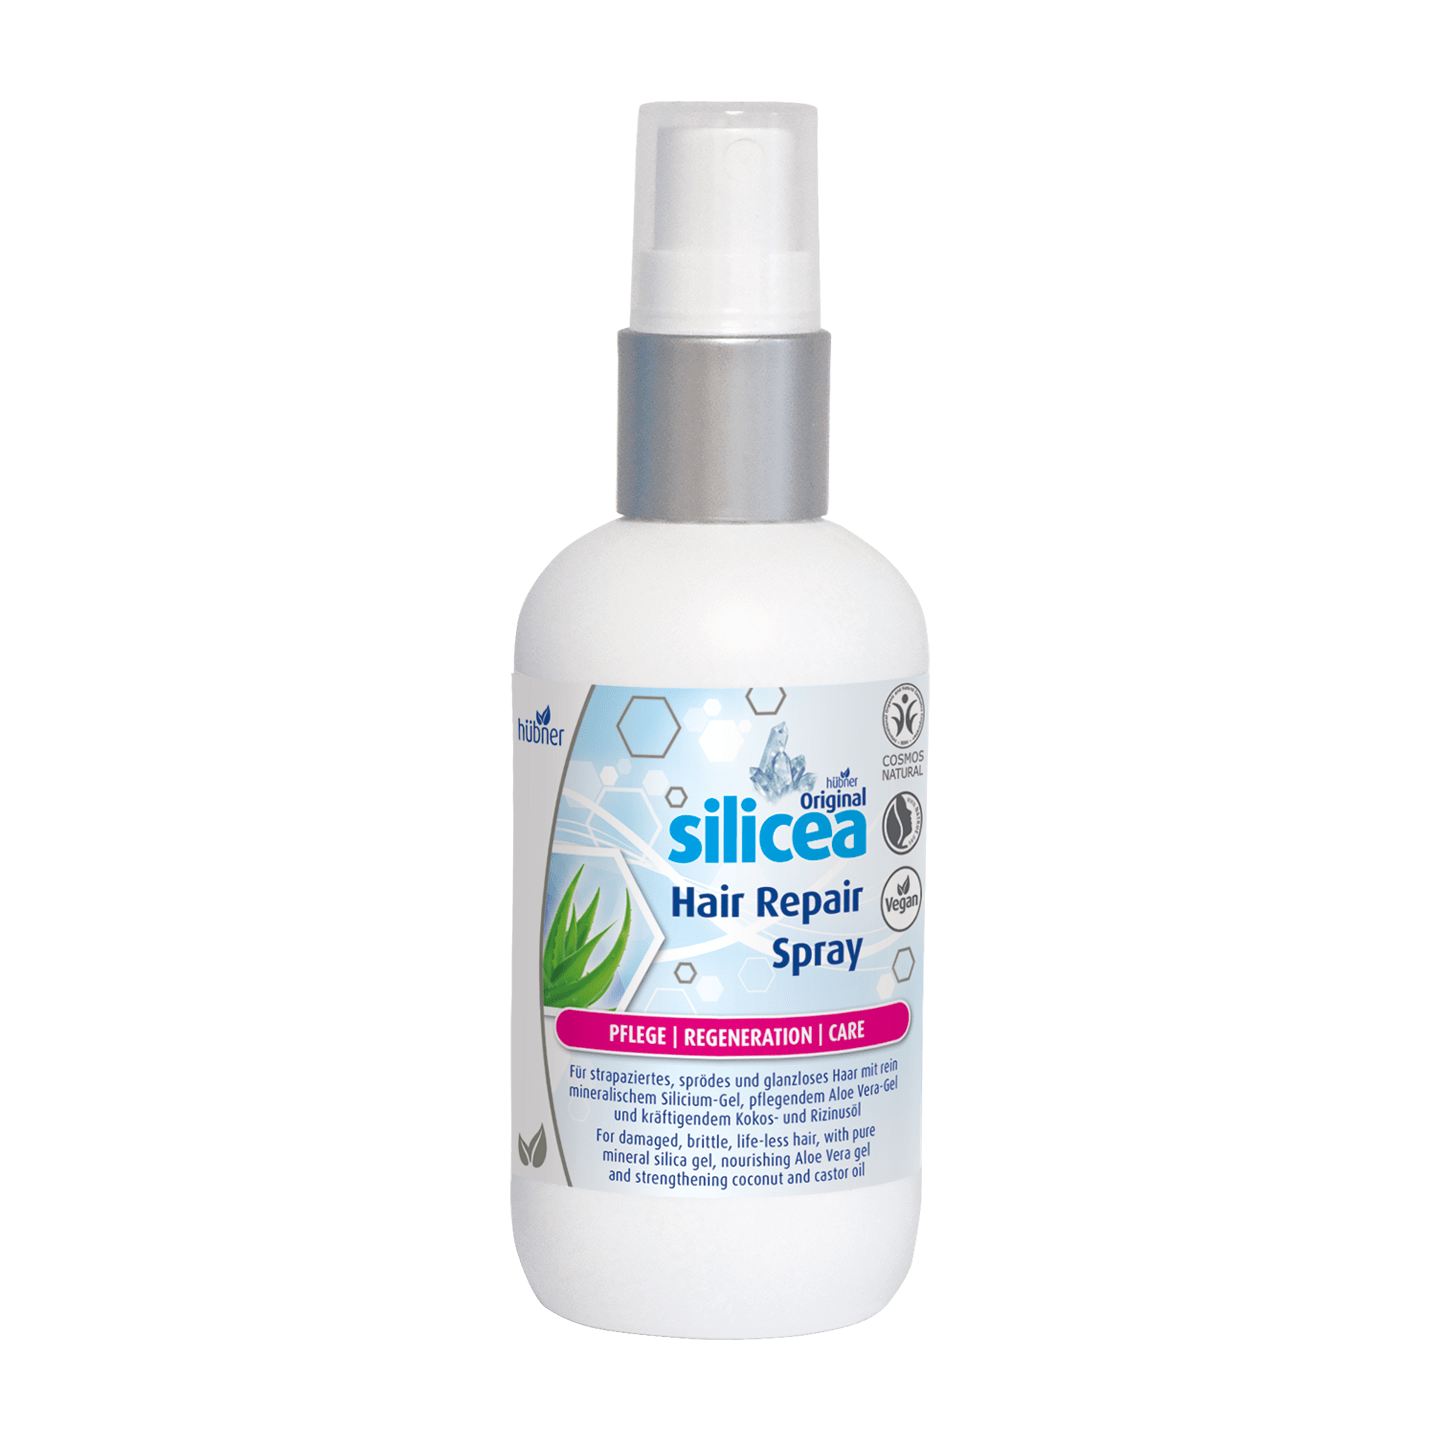  Hübner Original silicea® Hair Repair Spray